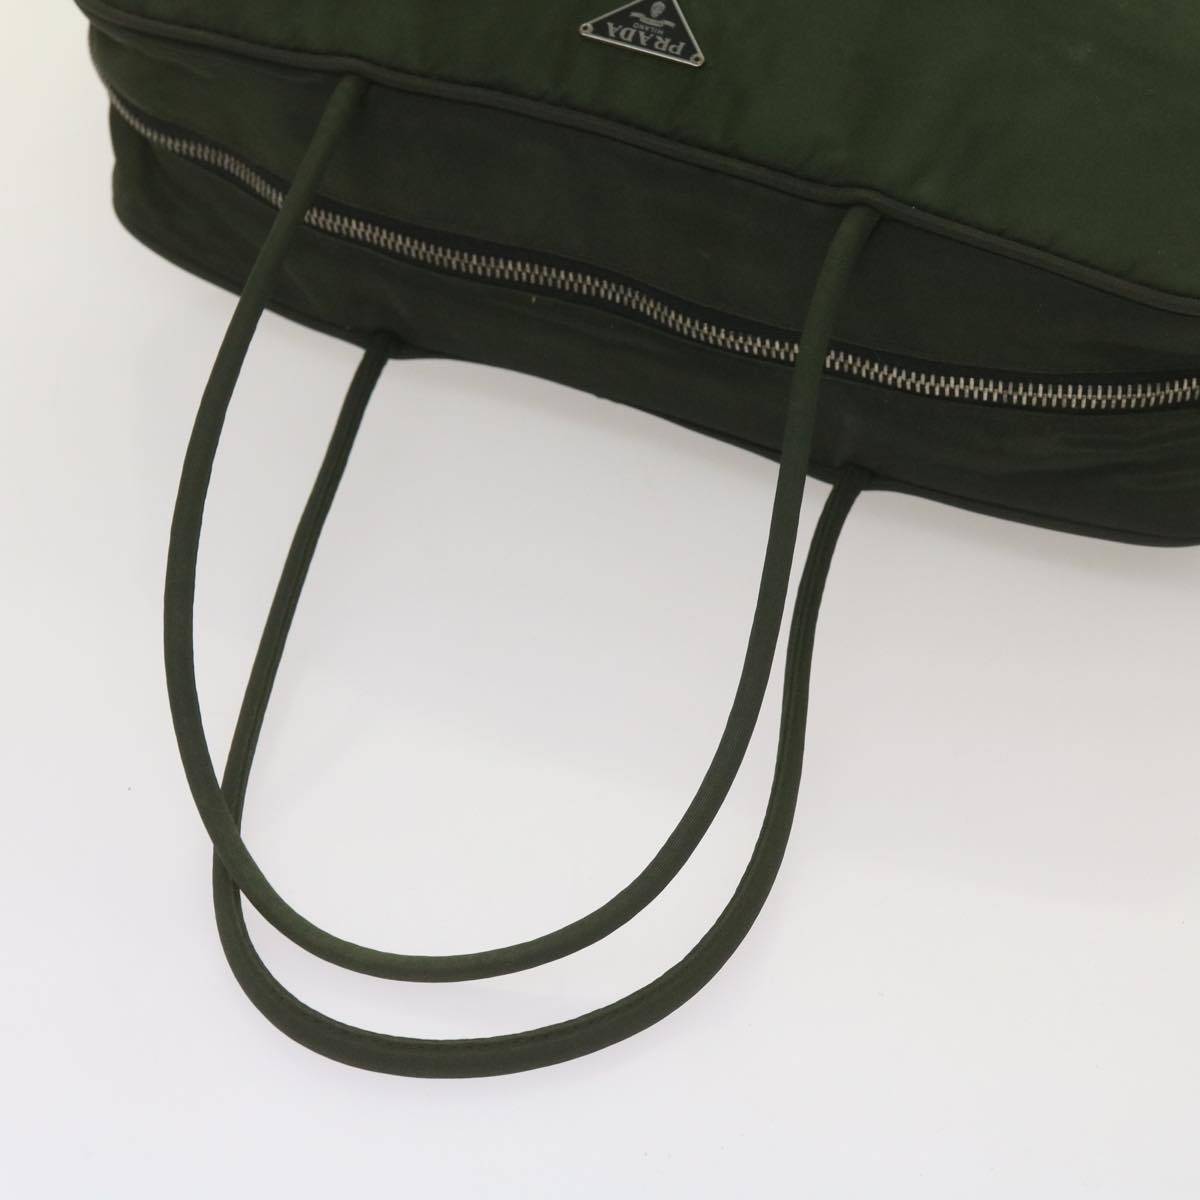 PRADA Shoulder Bag Nylon Khaki Auth fm3219